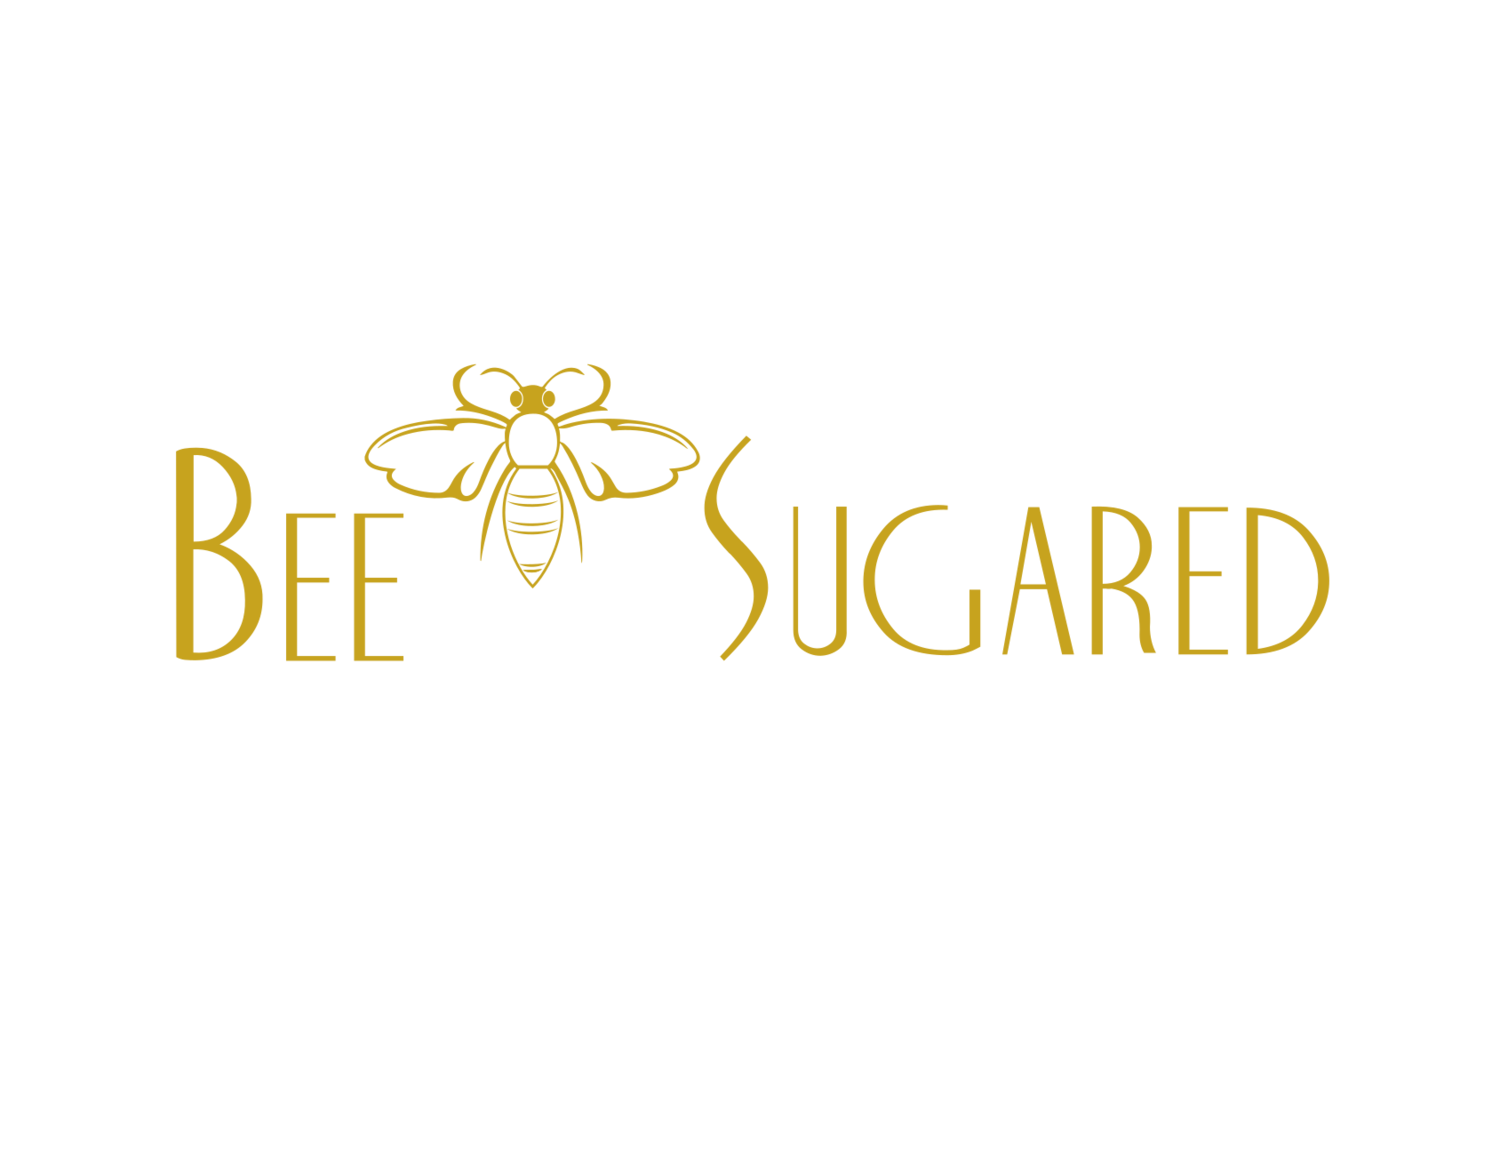 Bee Sugared